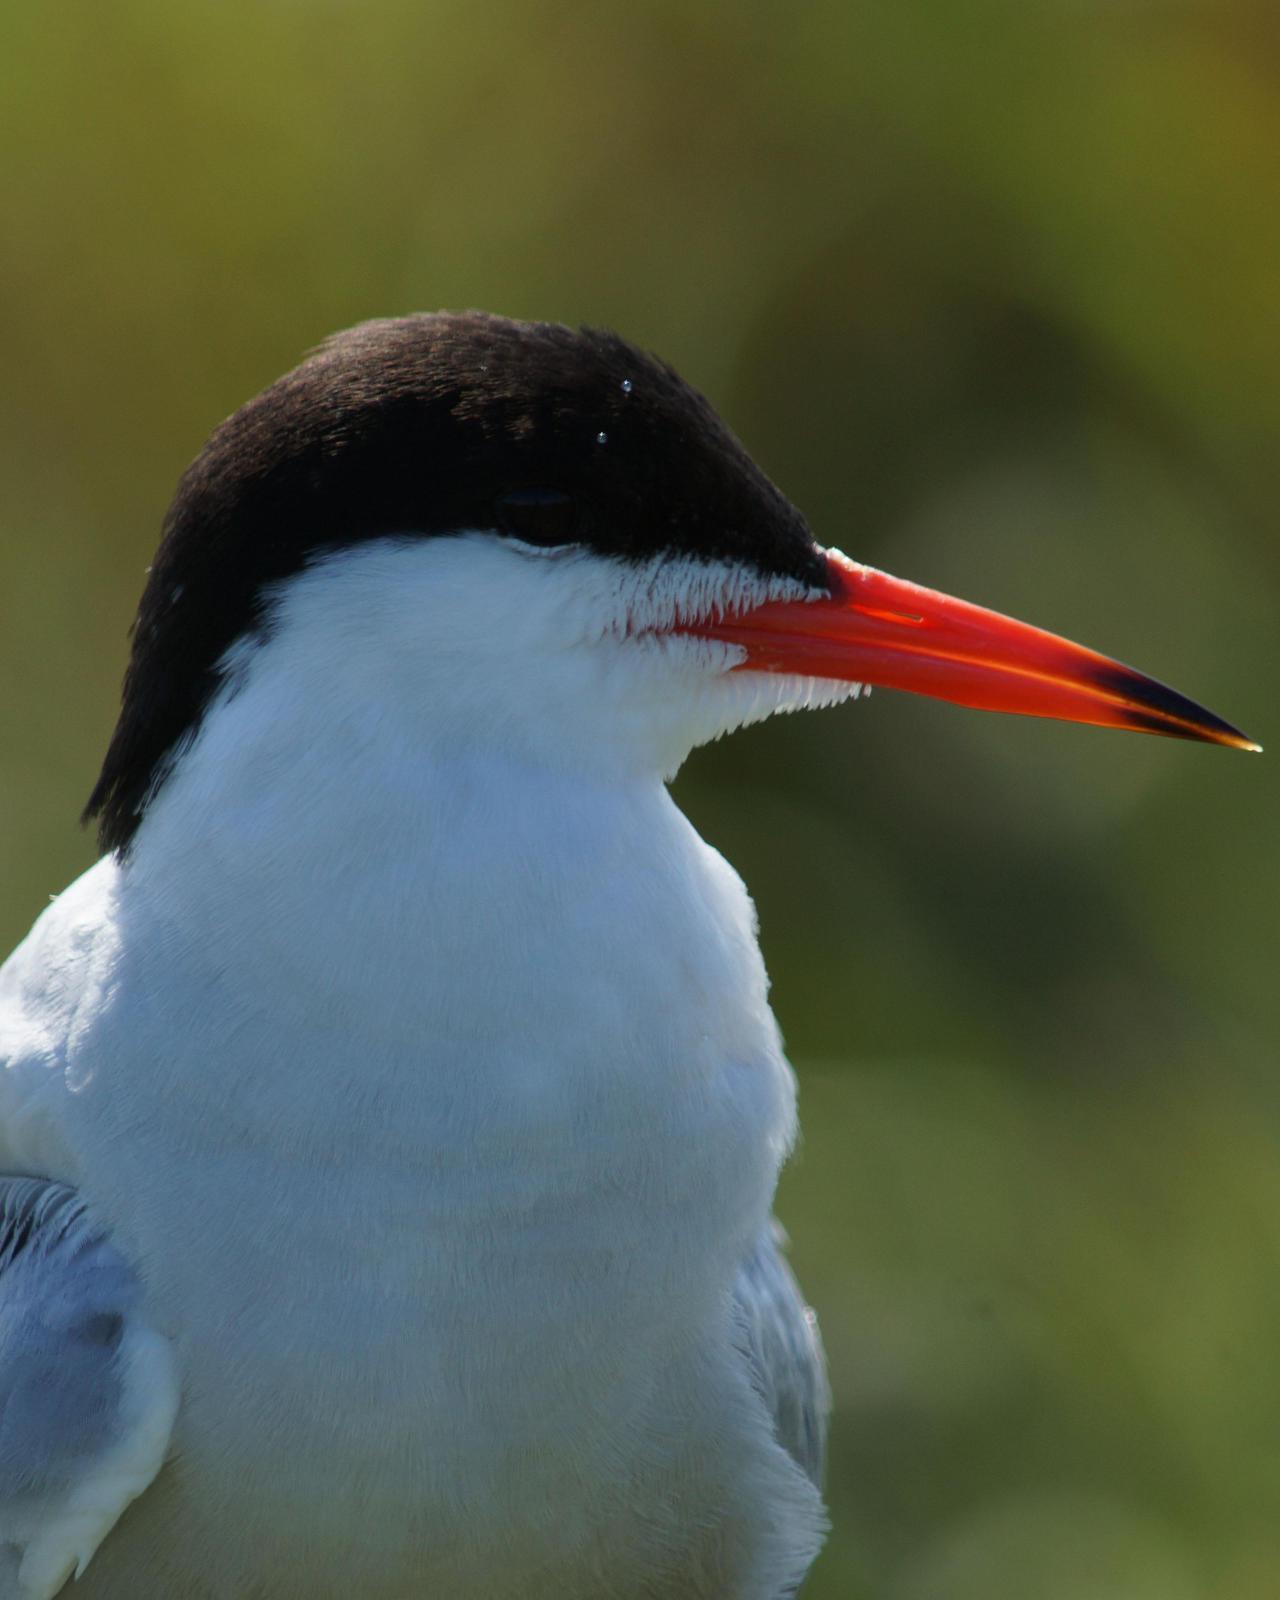 Common Tern Photo by Steve Percival